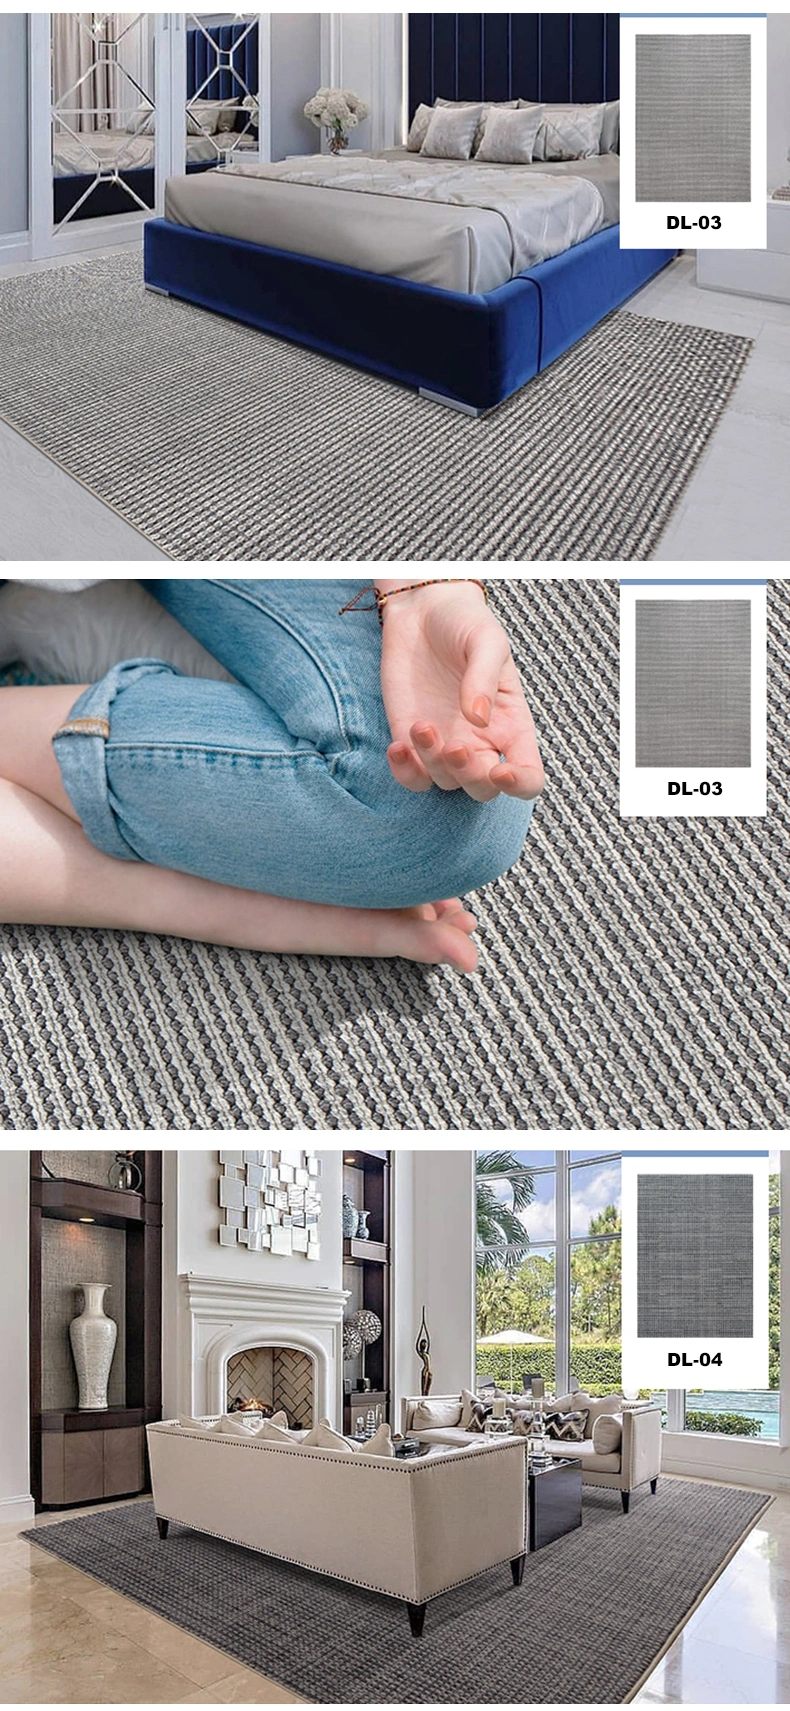 Light Grey Carpet Home Rugs Floor Carpets Area Rug Hand Woven Wool Rugs